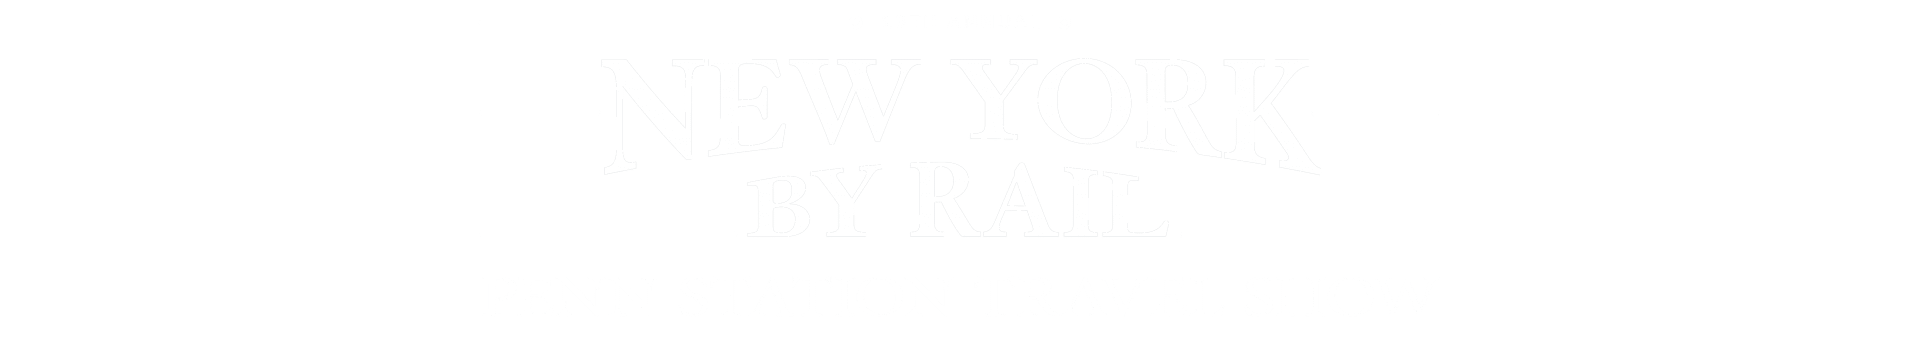 13th Annual New York By Rail Penn Station Travel Show